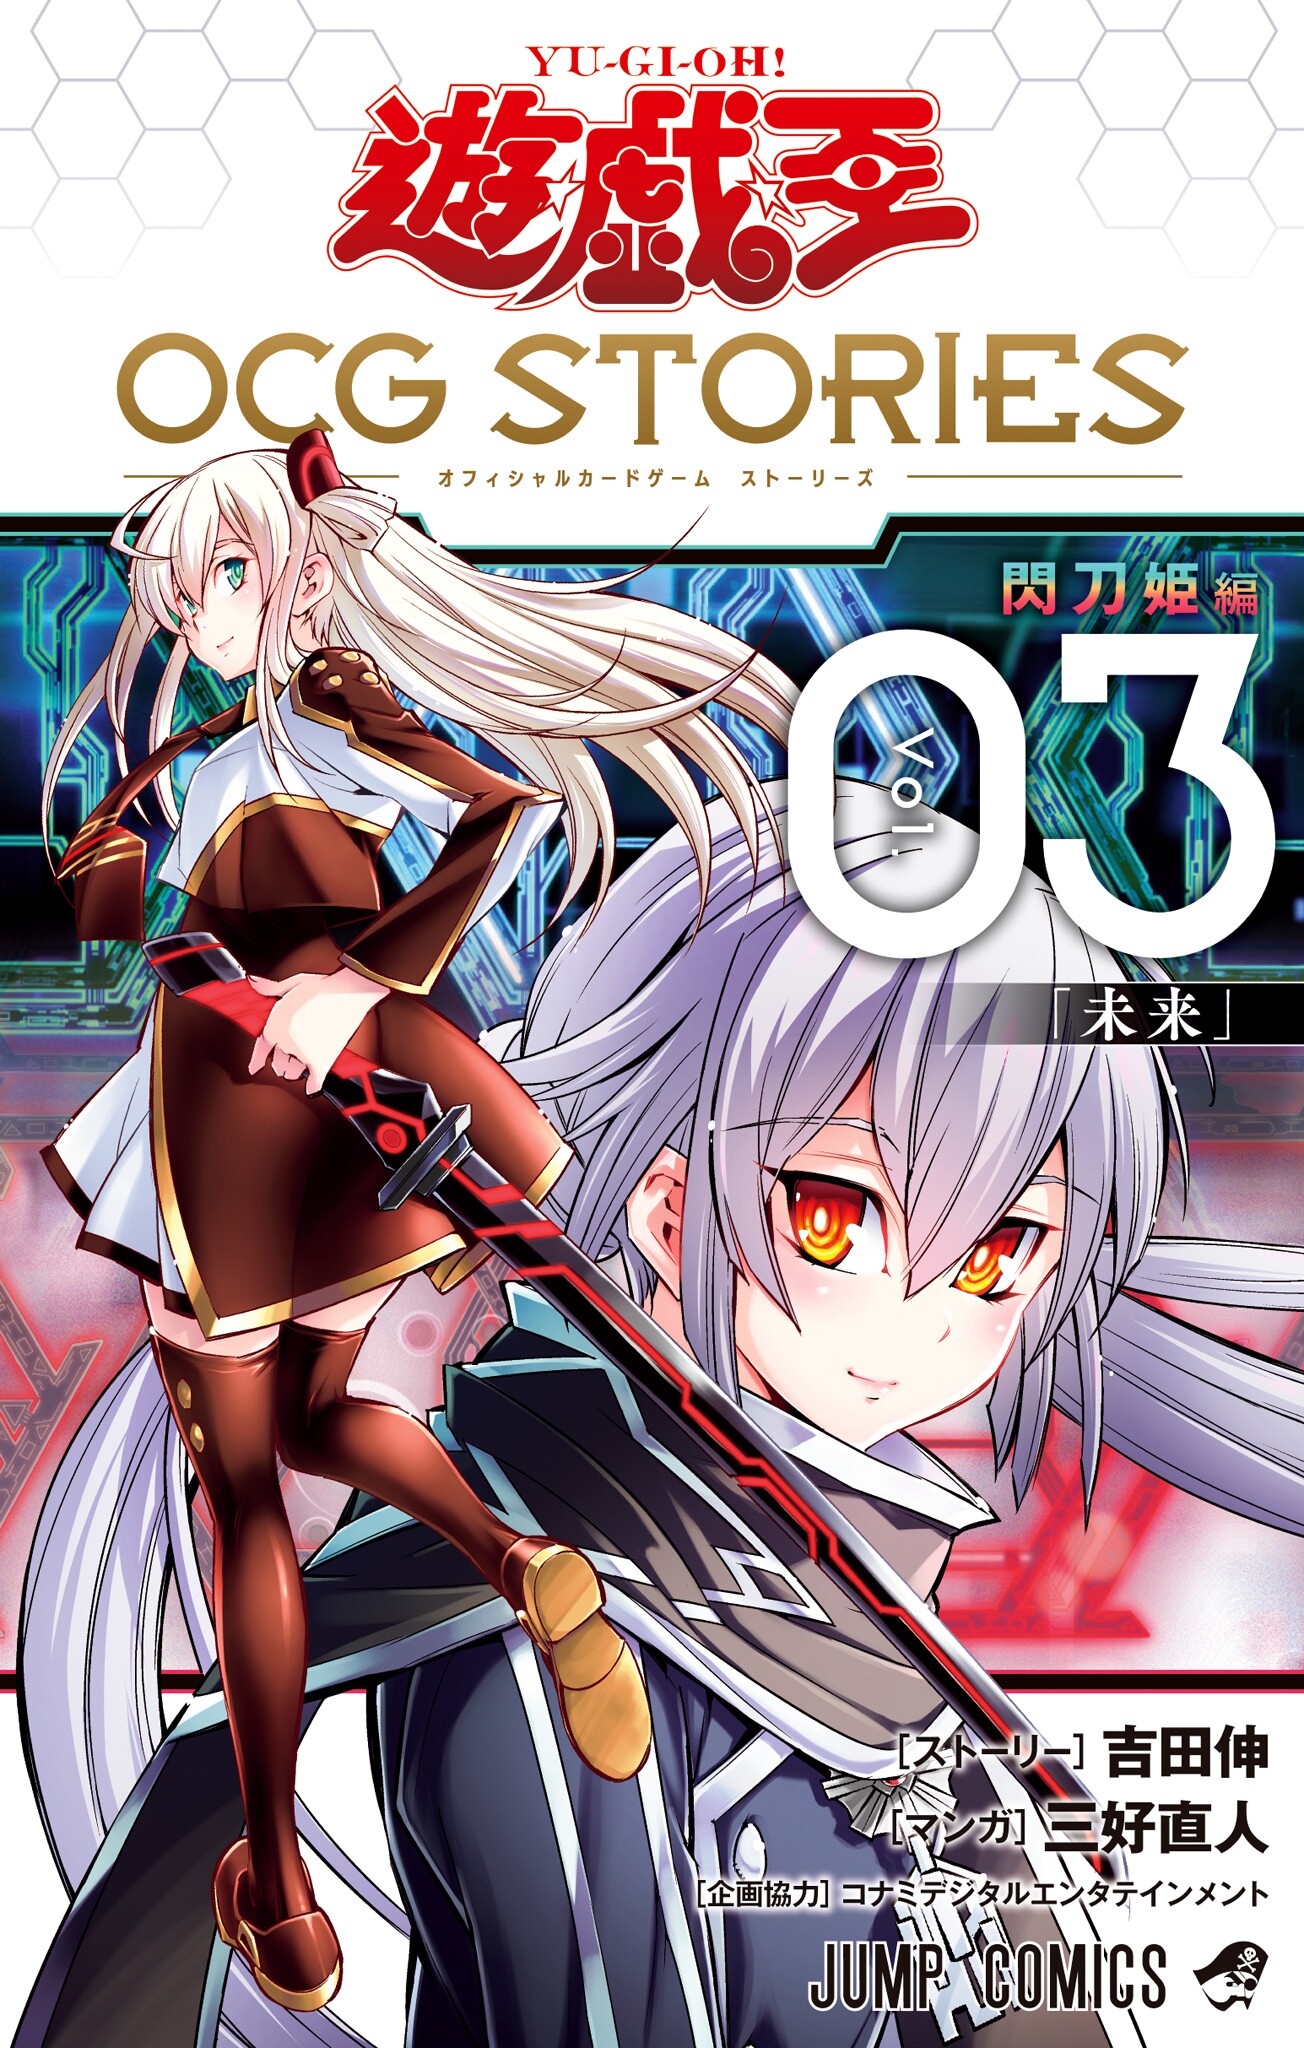 Yu-Gi-Oh OCG STORIES - MangaDex